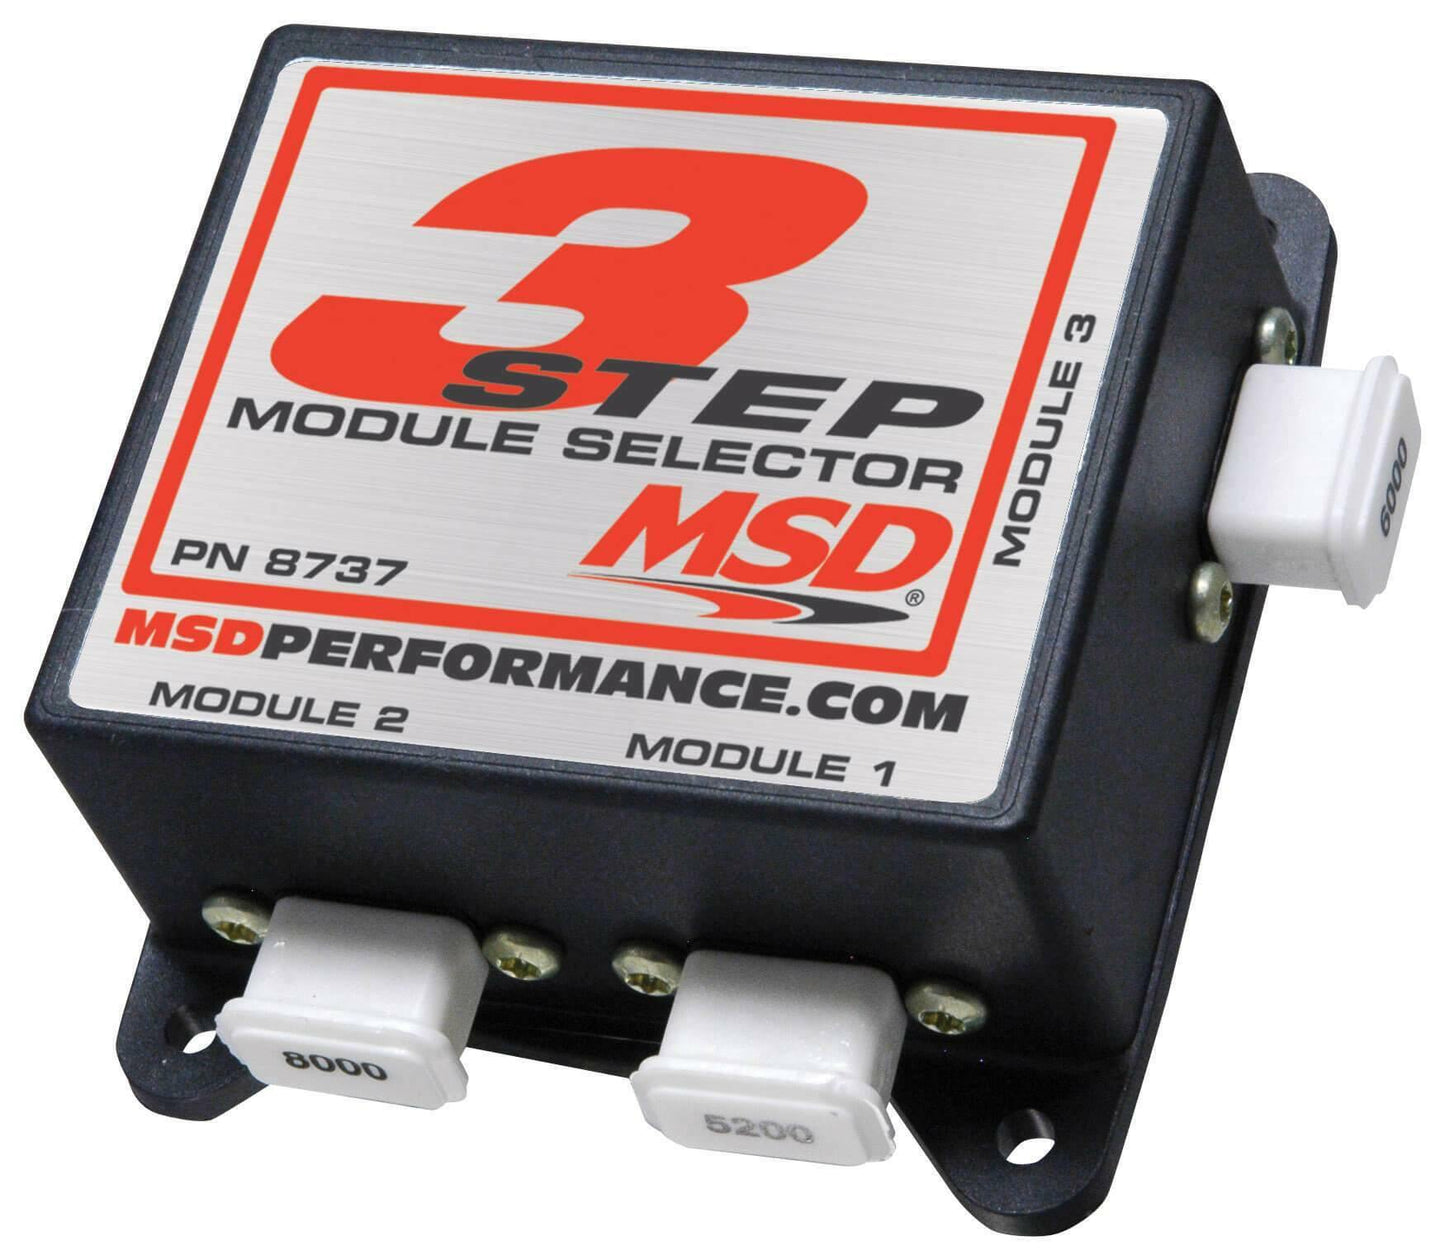 Three Step Module Selector - 8737